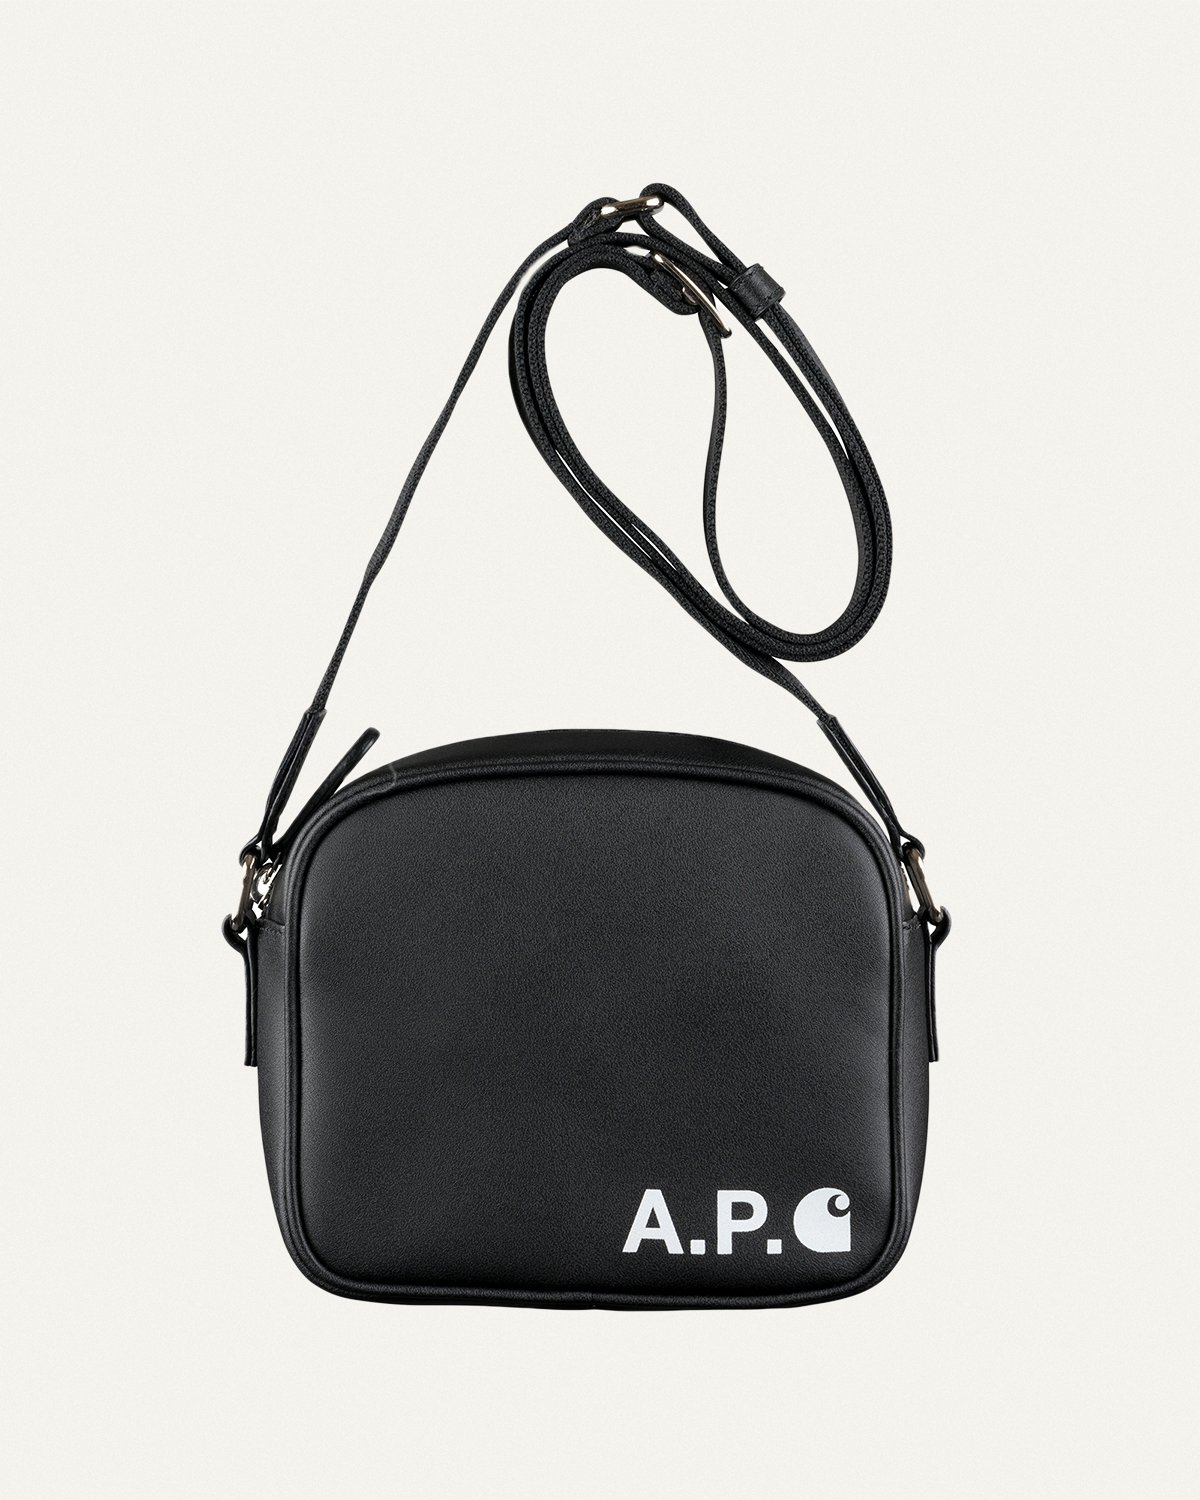 A.P.C. x Carhartt WIP - Nedi Shoulder Bag - Accessories - Black - Image 1